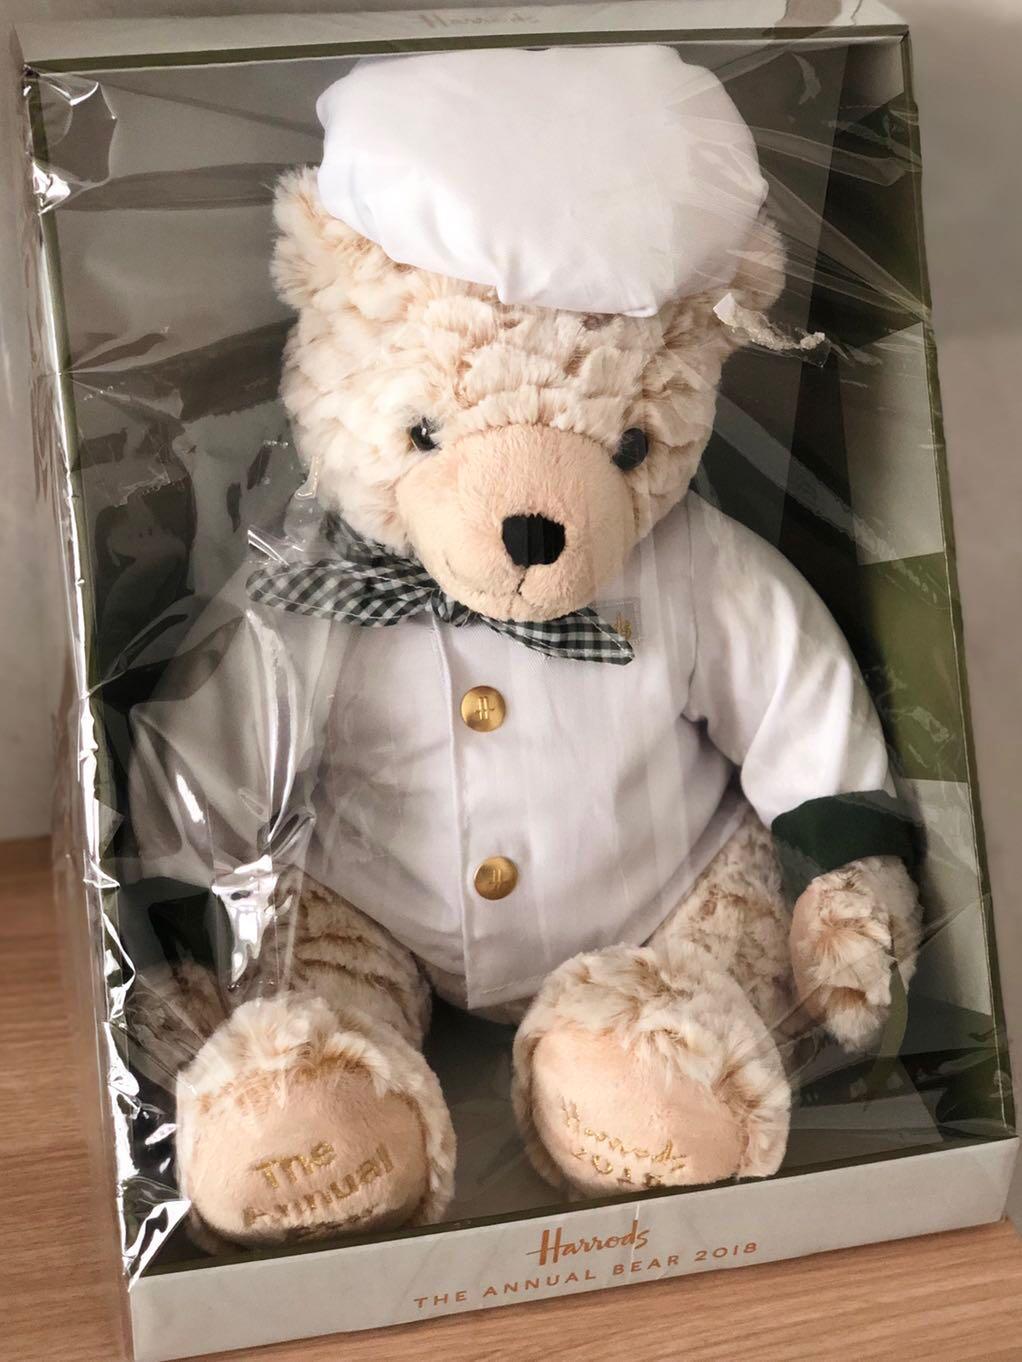 harrods 2018 teddy bear